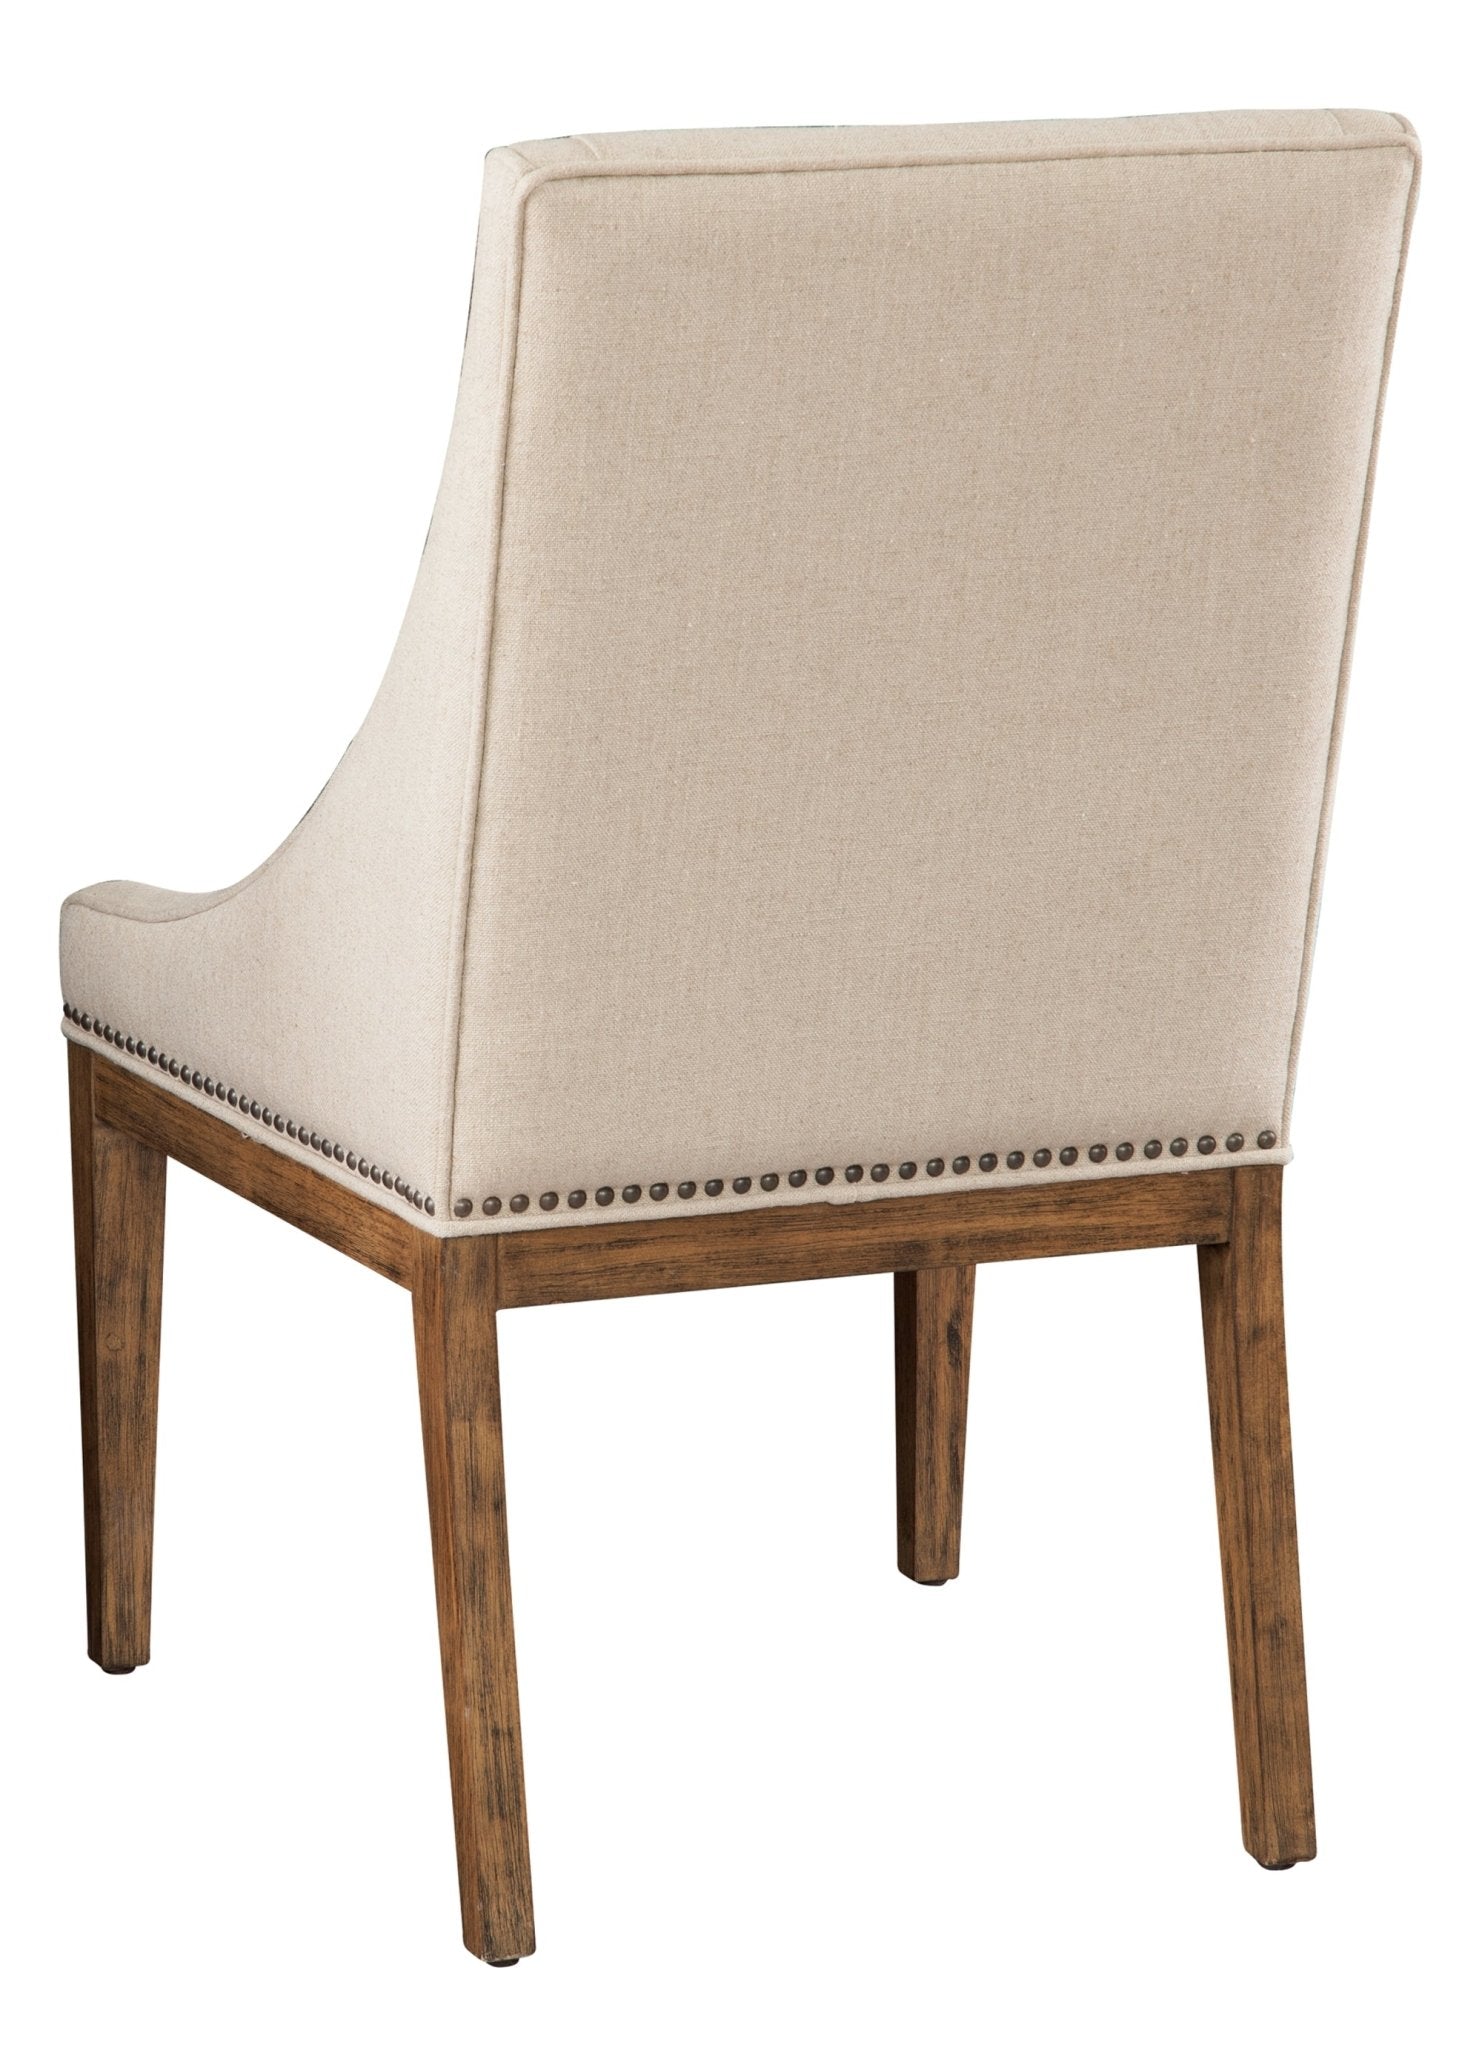 Bedford Park Sling Arm Chair - Furniture - Tipplergoods